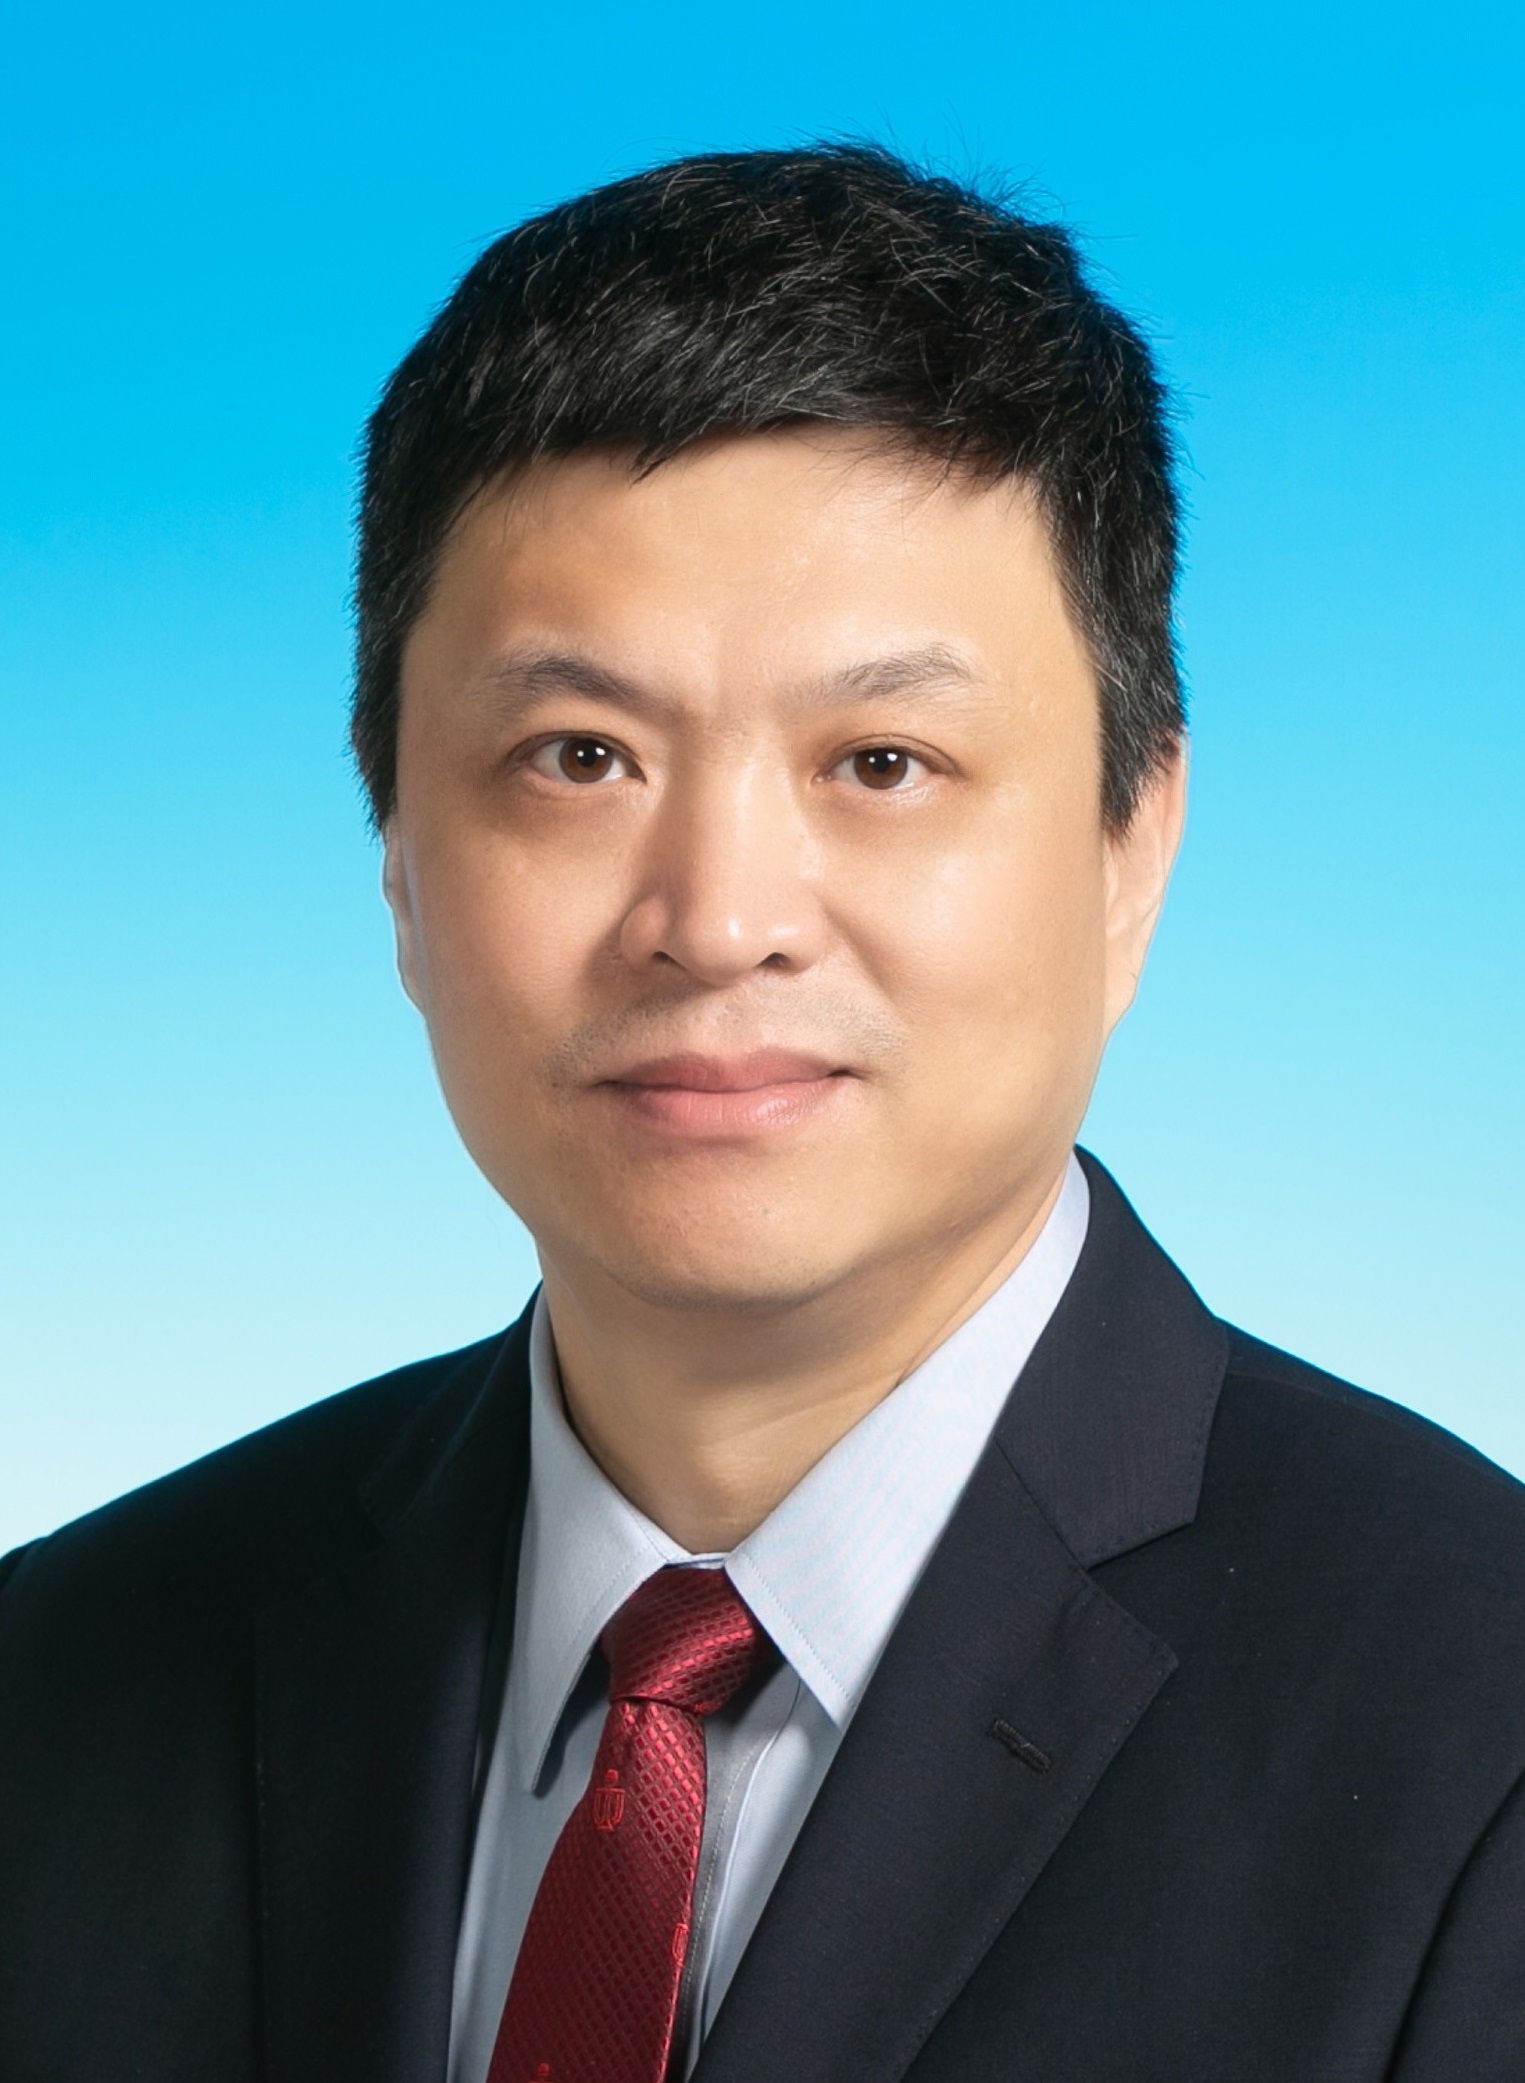 Prof. ZHANG